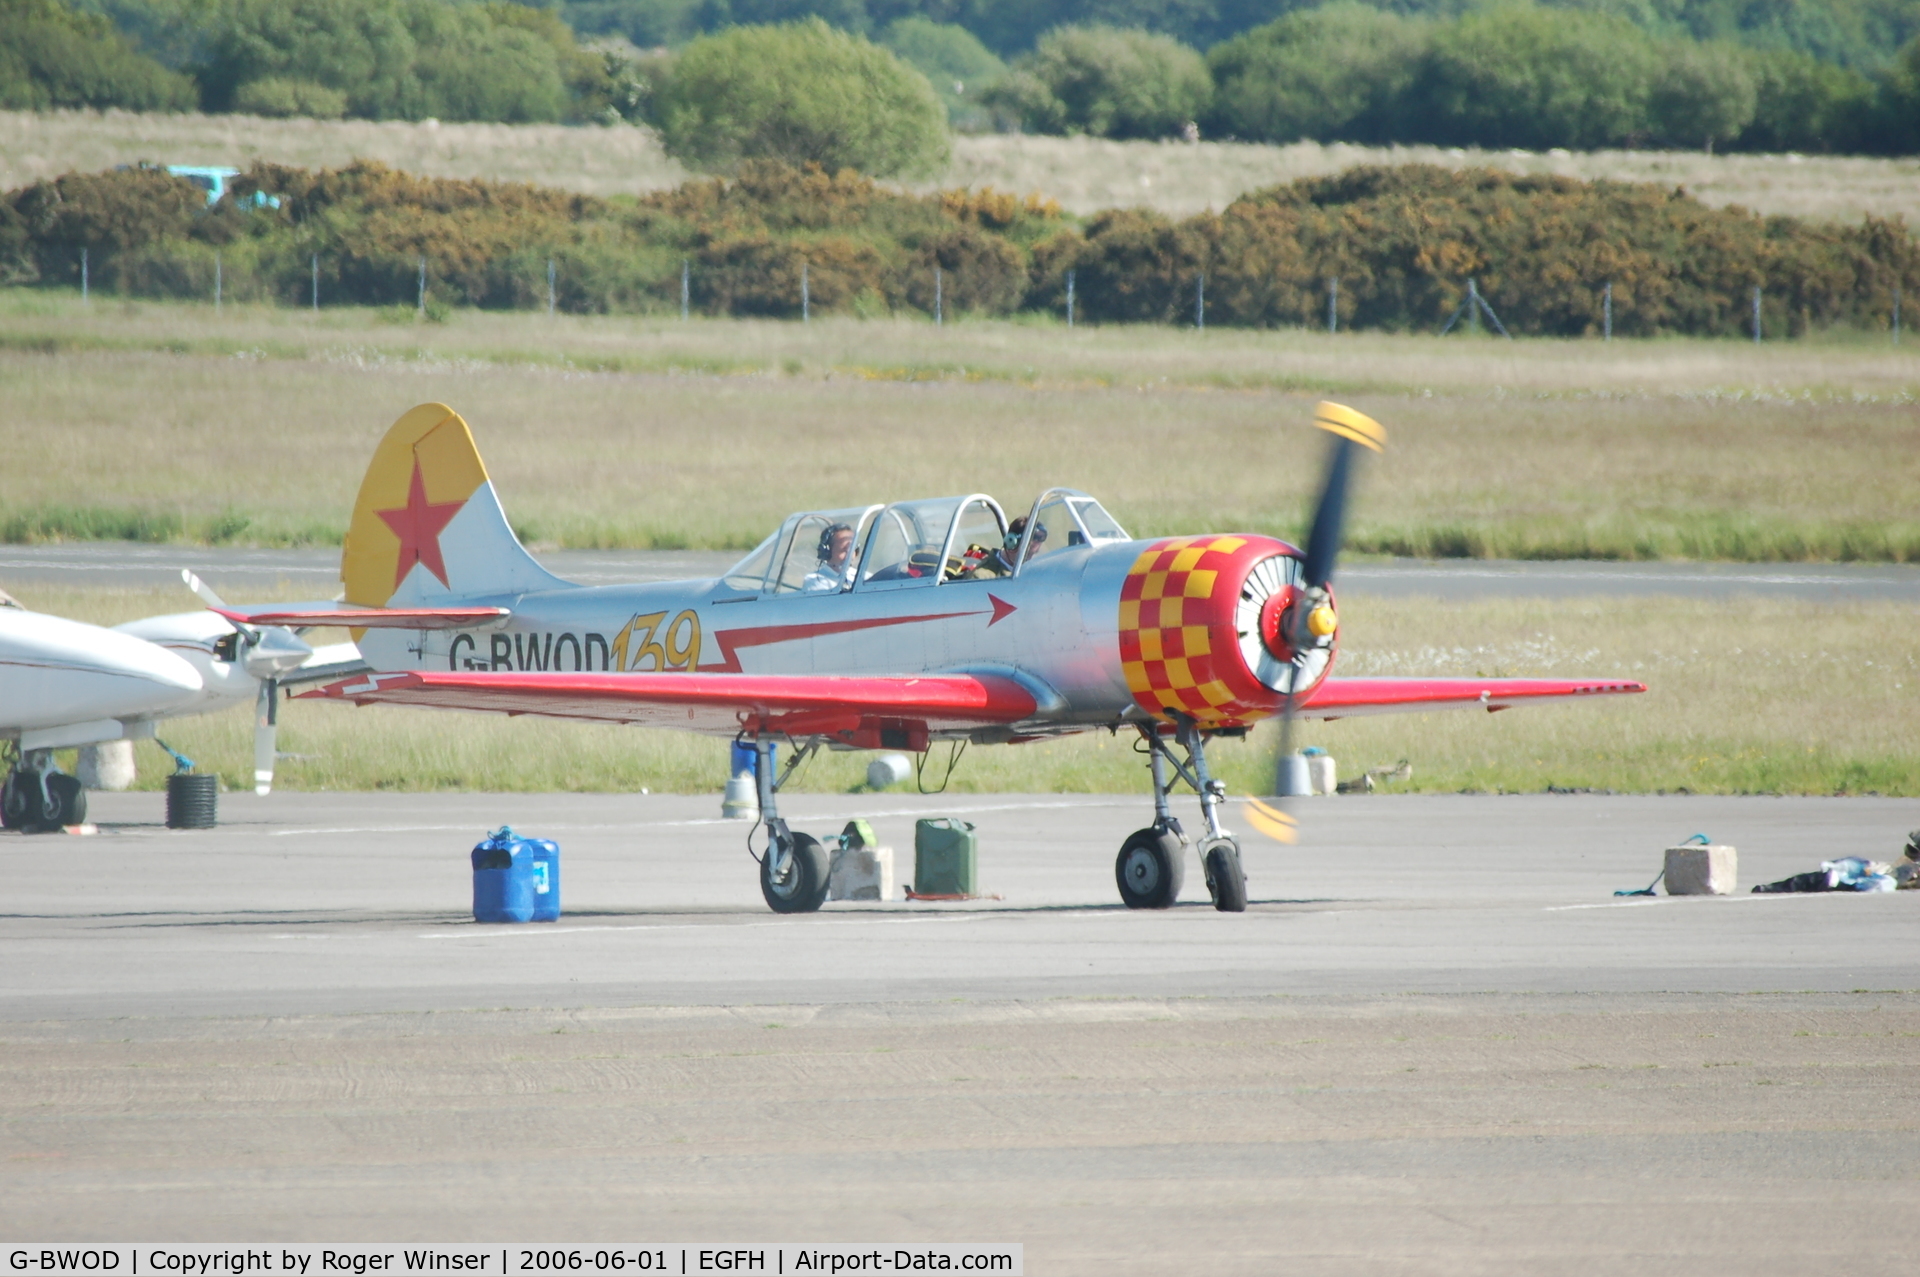 G-BWOD, 1983 Bacau Yak-52 C/N 833810, Based at Swansea Airport 2006 -2009. Re-registered G-STNR on 1st December 2010.